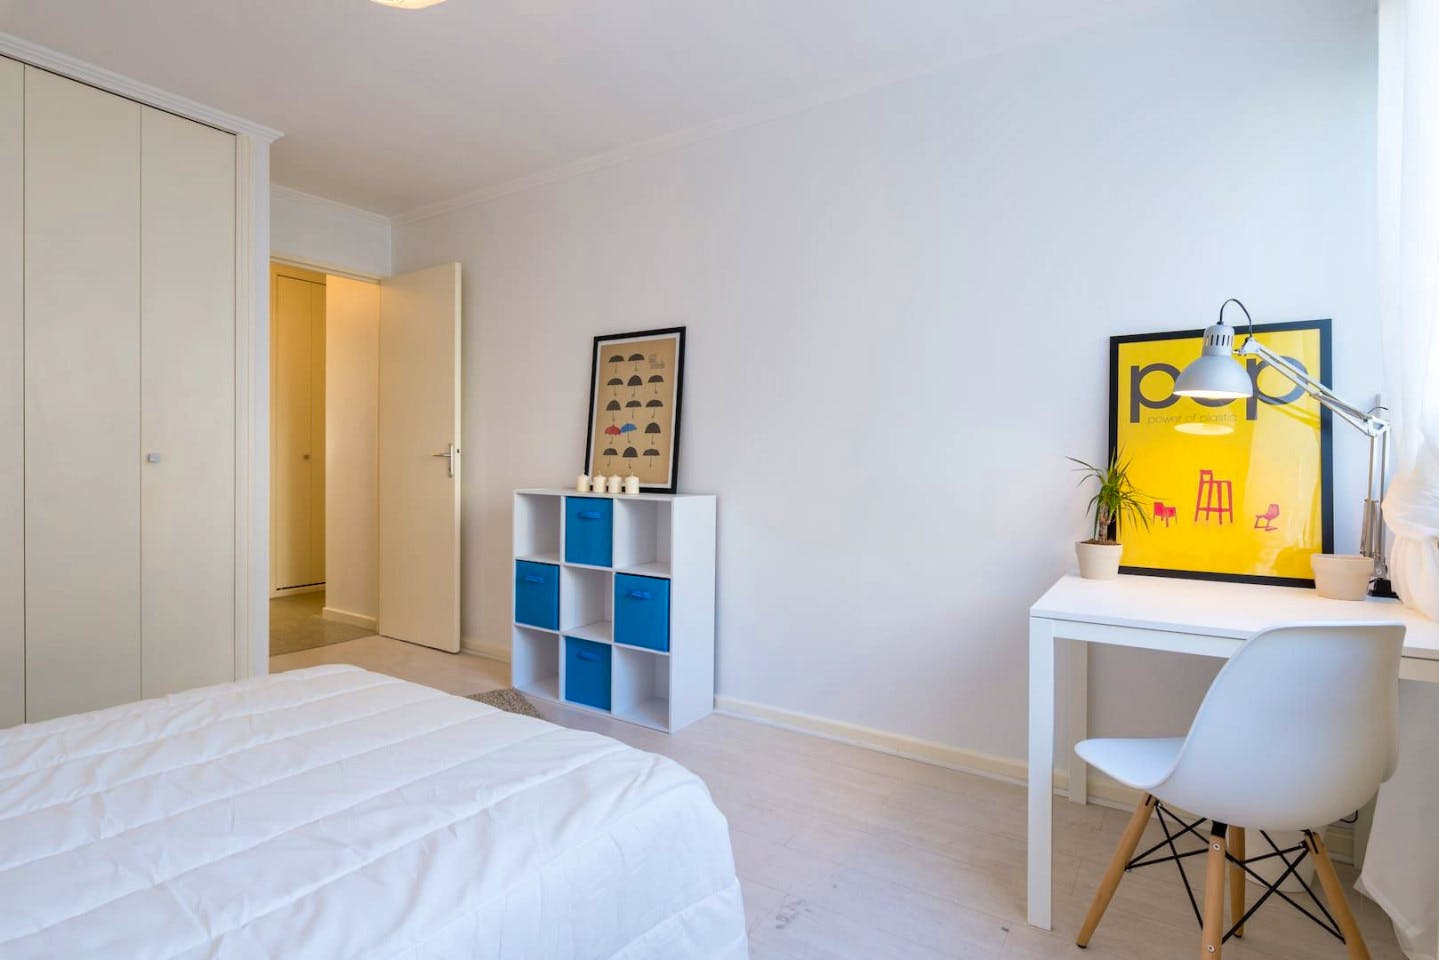 5-Bed Apartment on Rue Saint-Sidoine